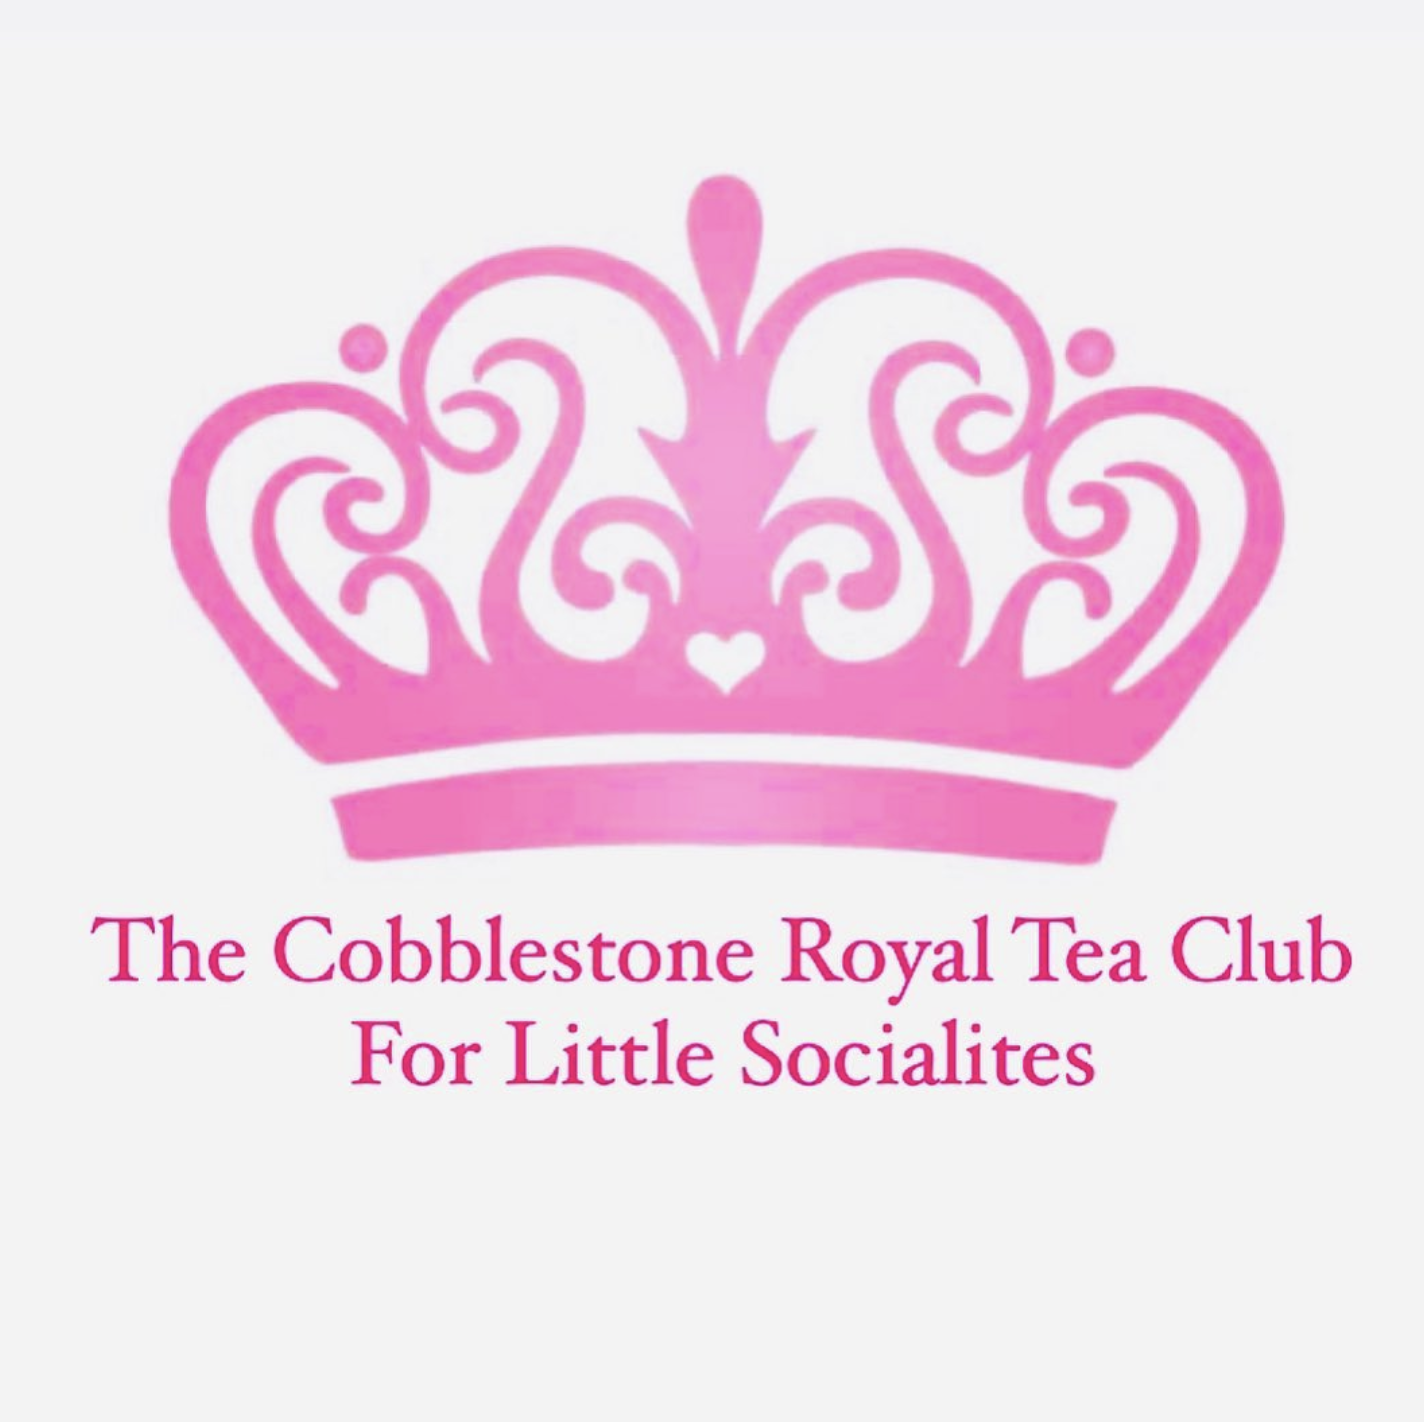 Cobblestone royal tea club logo